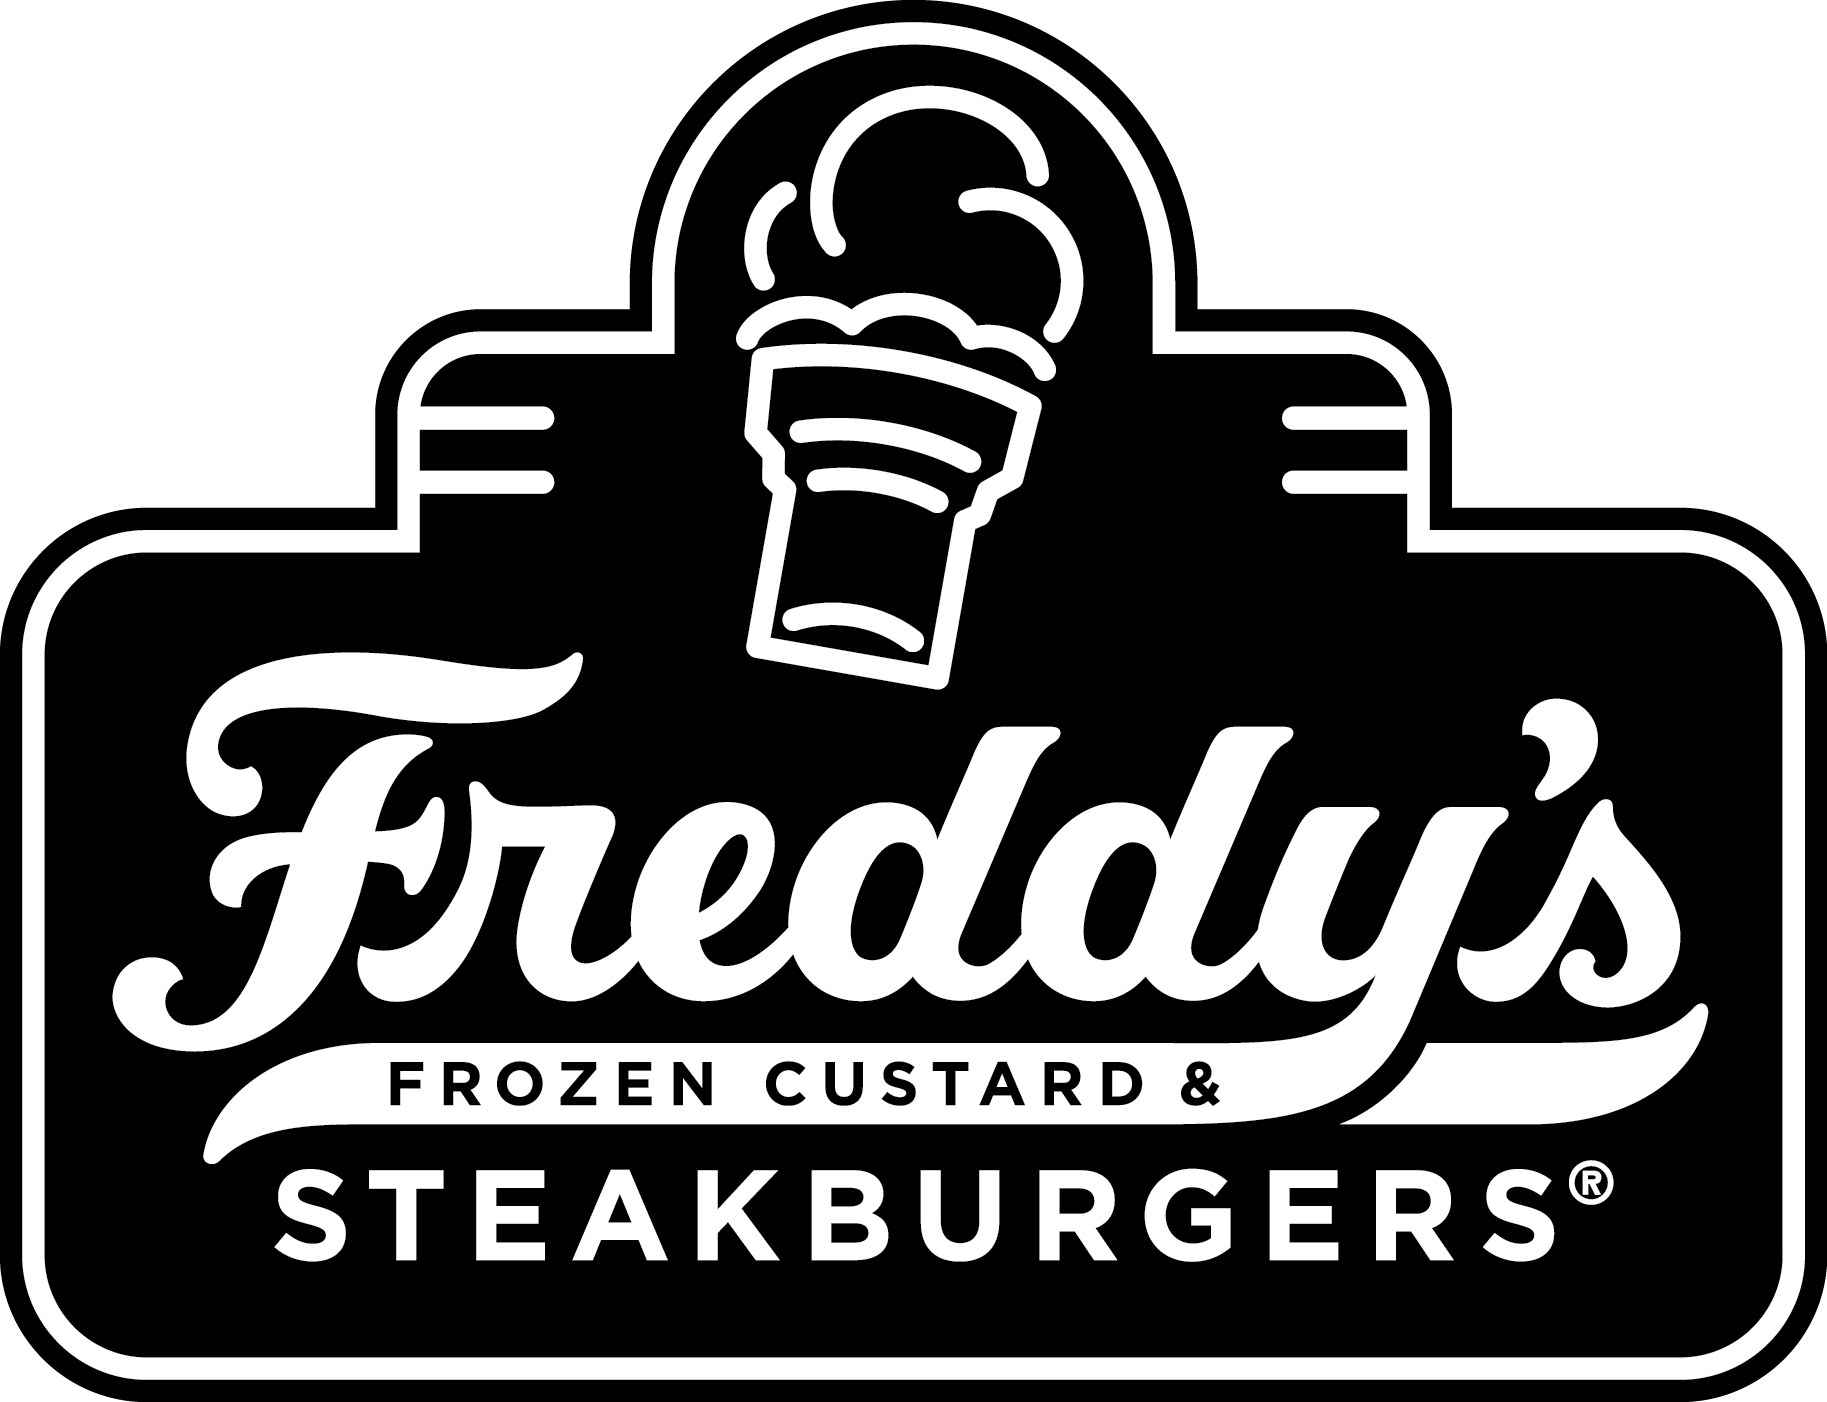 Frozen Black and White Logo - Graphics Library's Frozen Custard & Steakburgers